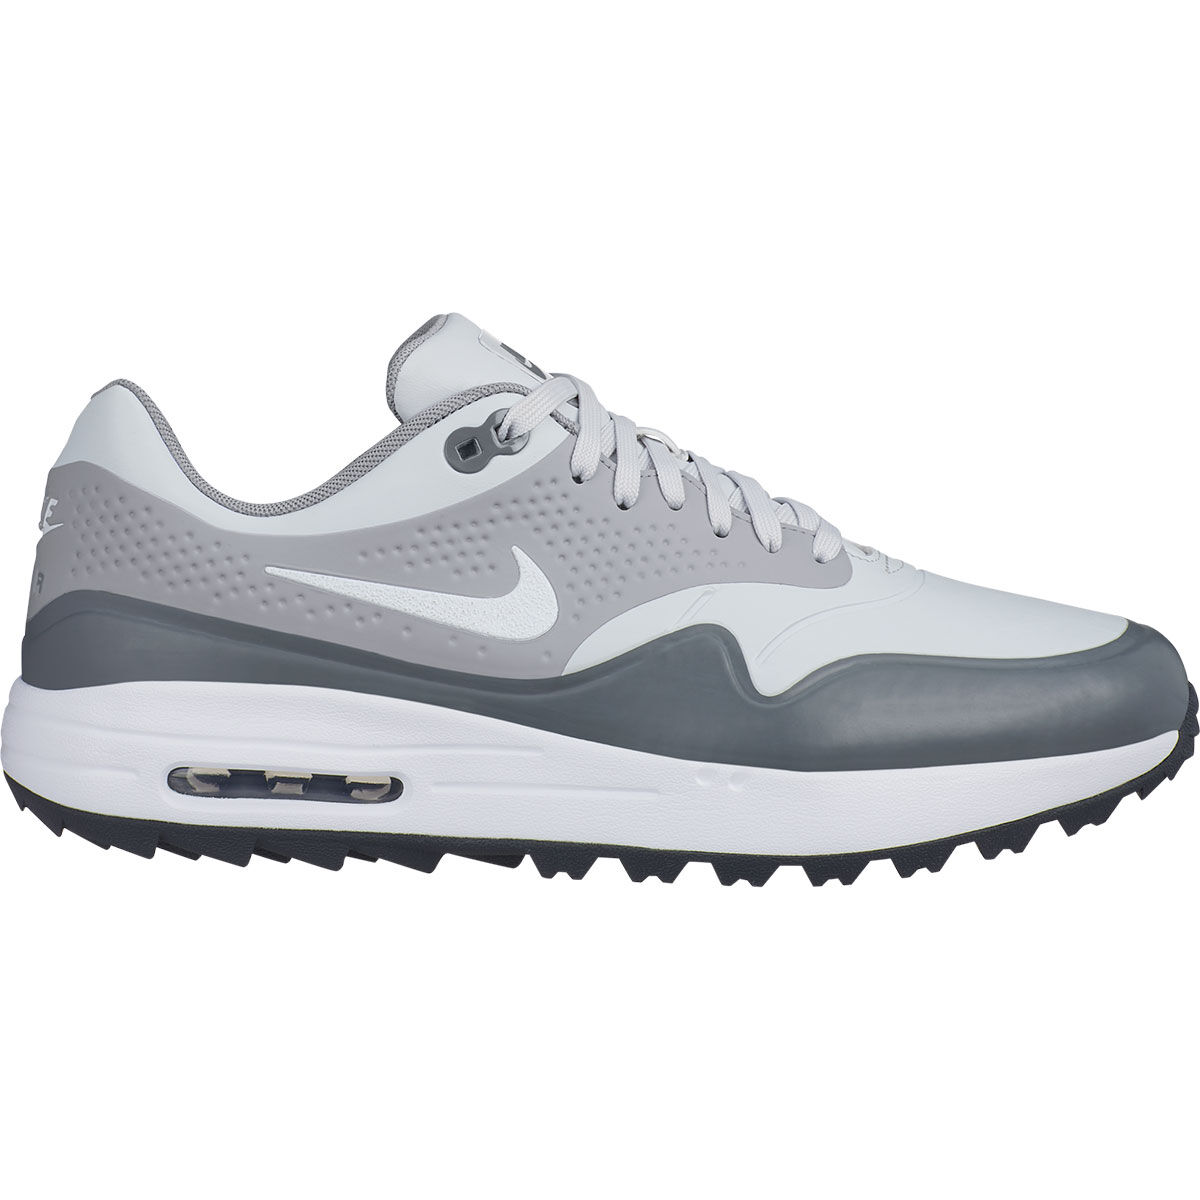 nike air max 1g golf shoes grey online -